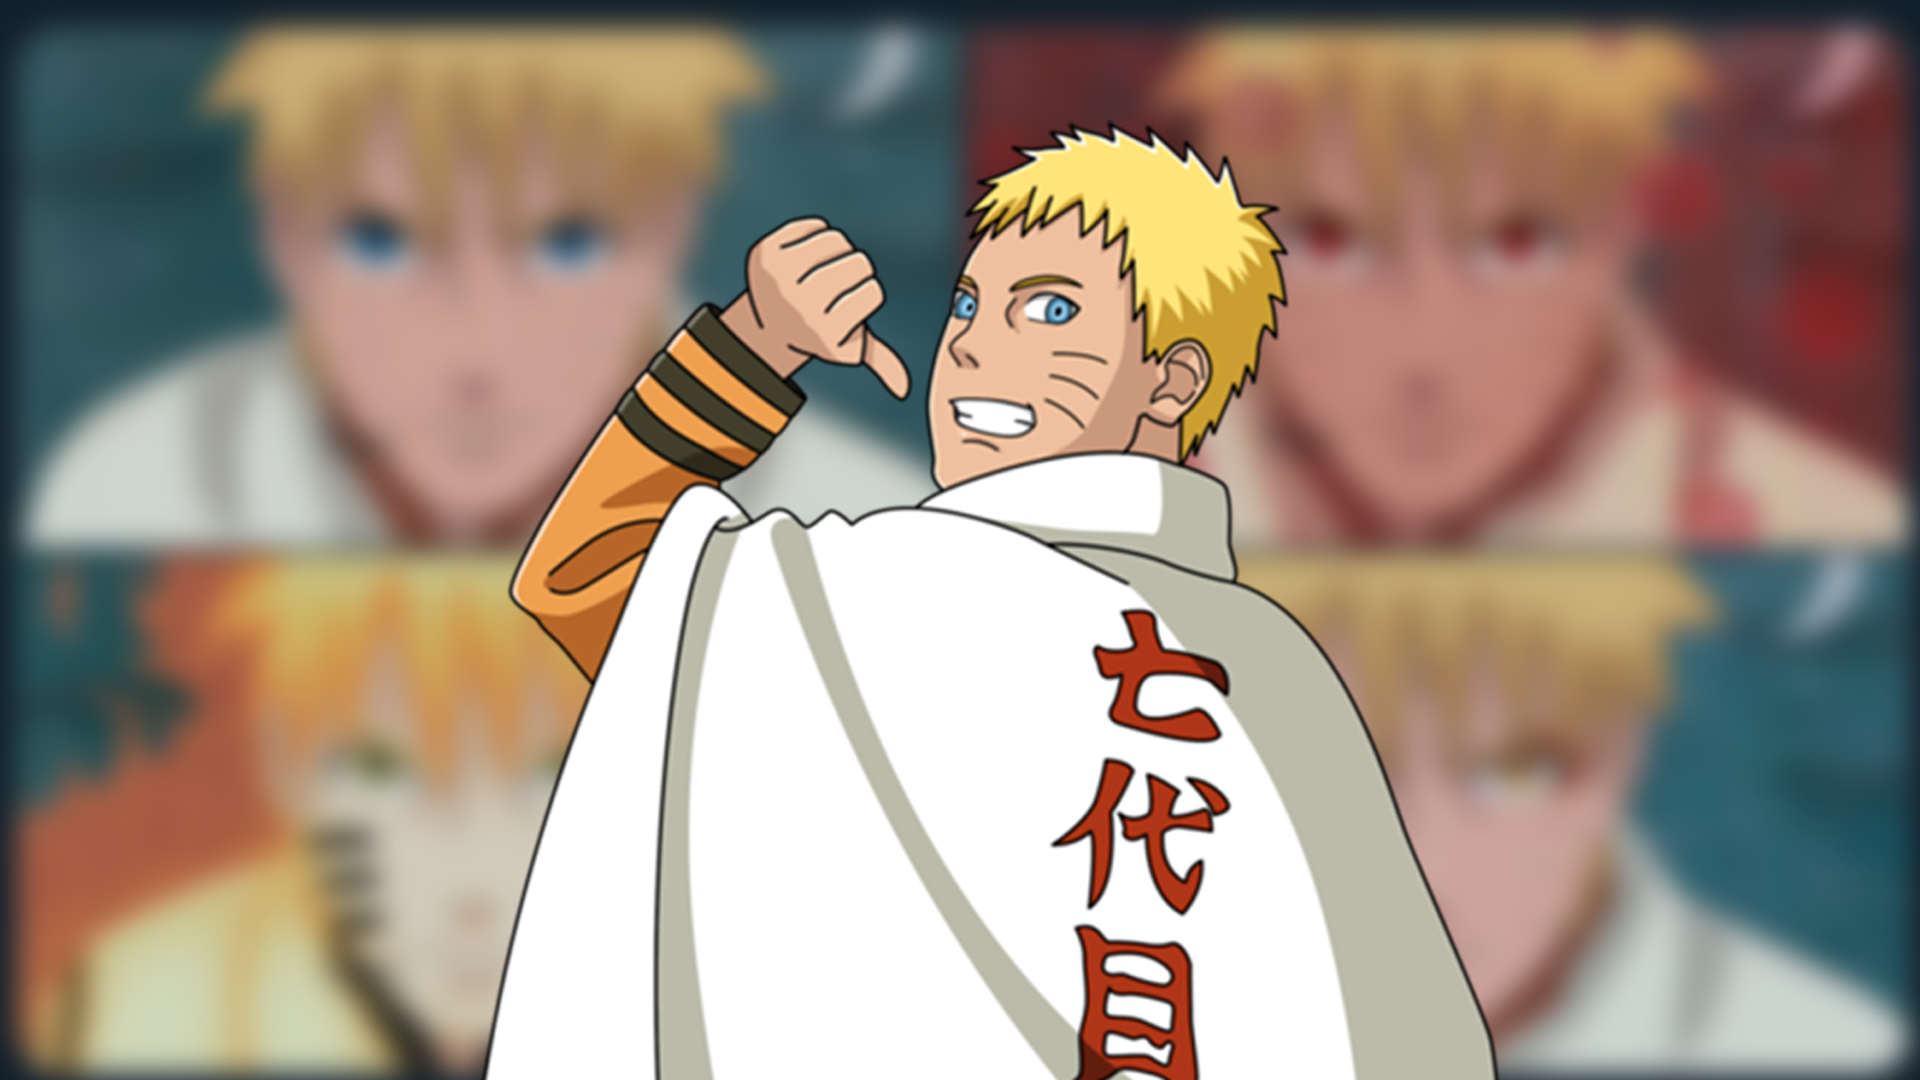 Boruto - Em qual episódio Naruto se torna Hokage? - Critical Hits